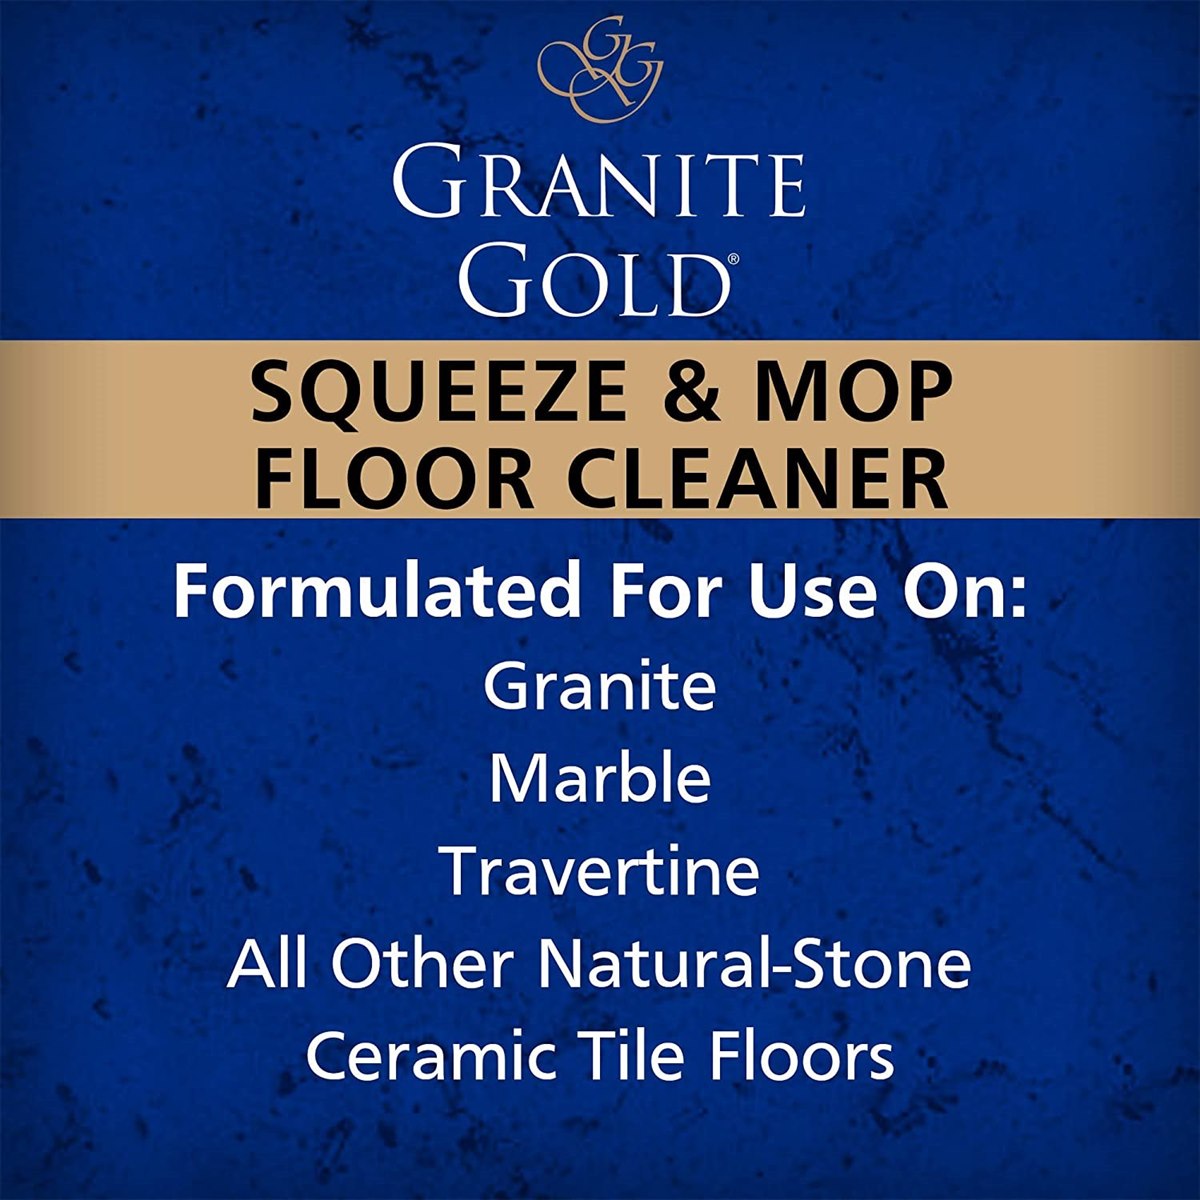 Granite Gold Floor Cleaner